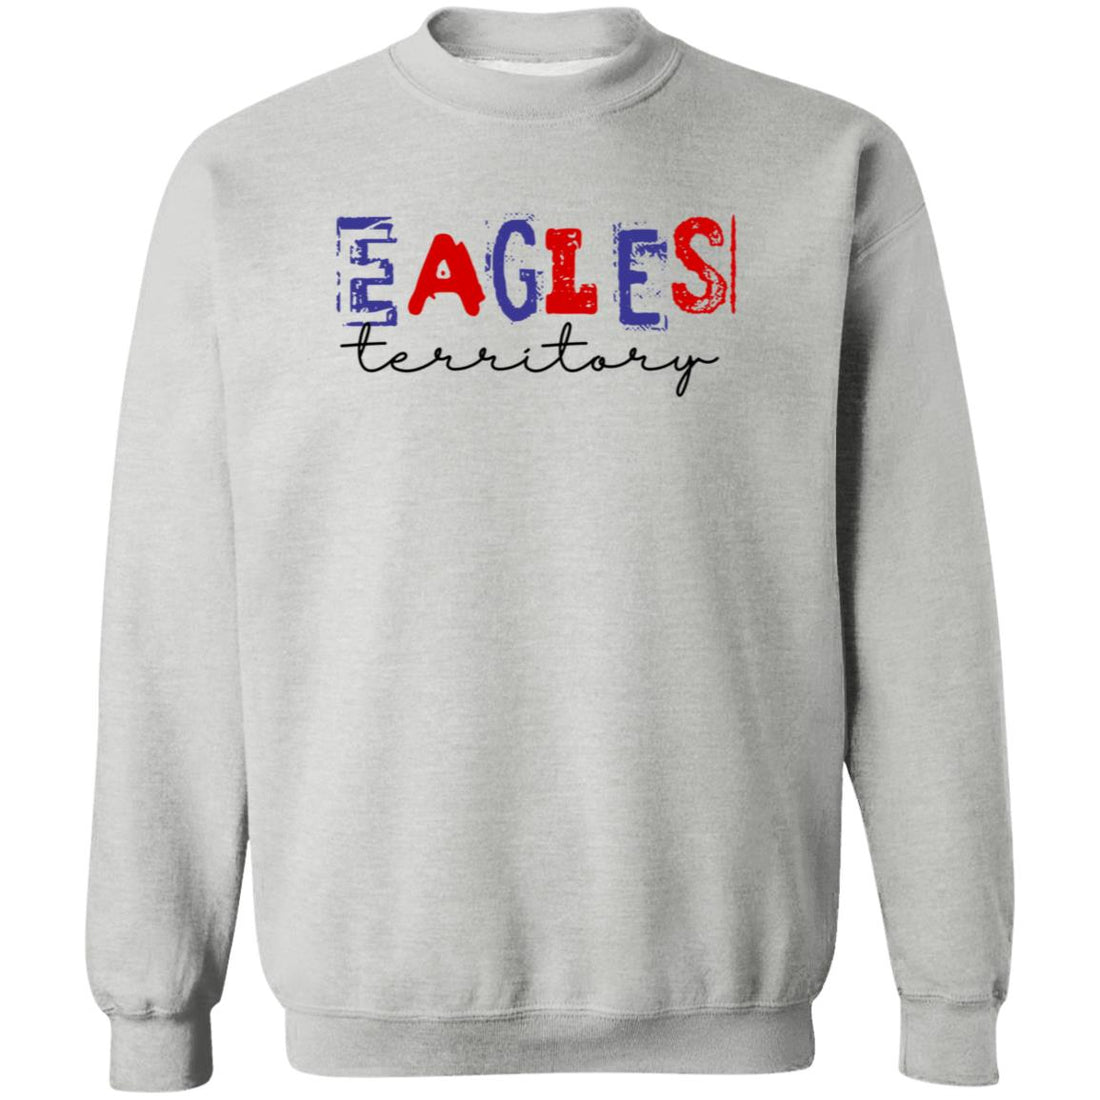 Eagles Territory Crewneck Pullover Sweatshirt - Sweatshirts - Positively Sassy - Eagles Territory Crewneck Pullover Sweatshirt